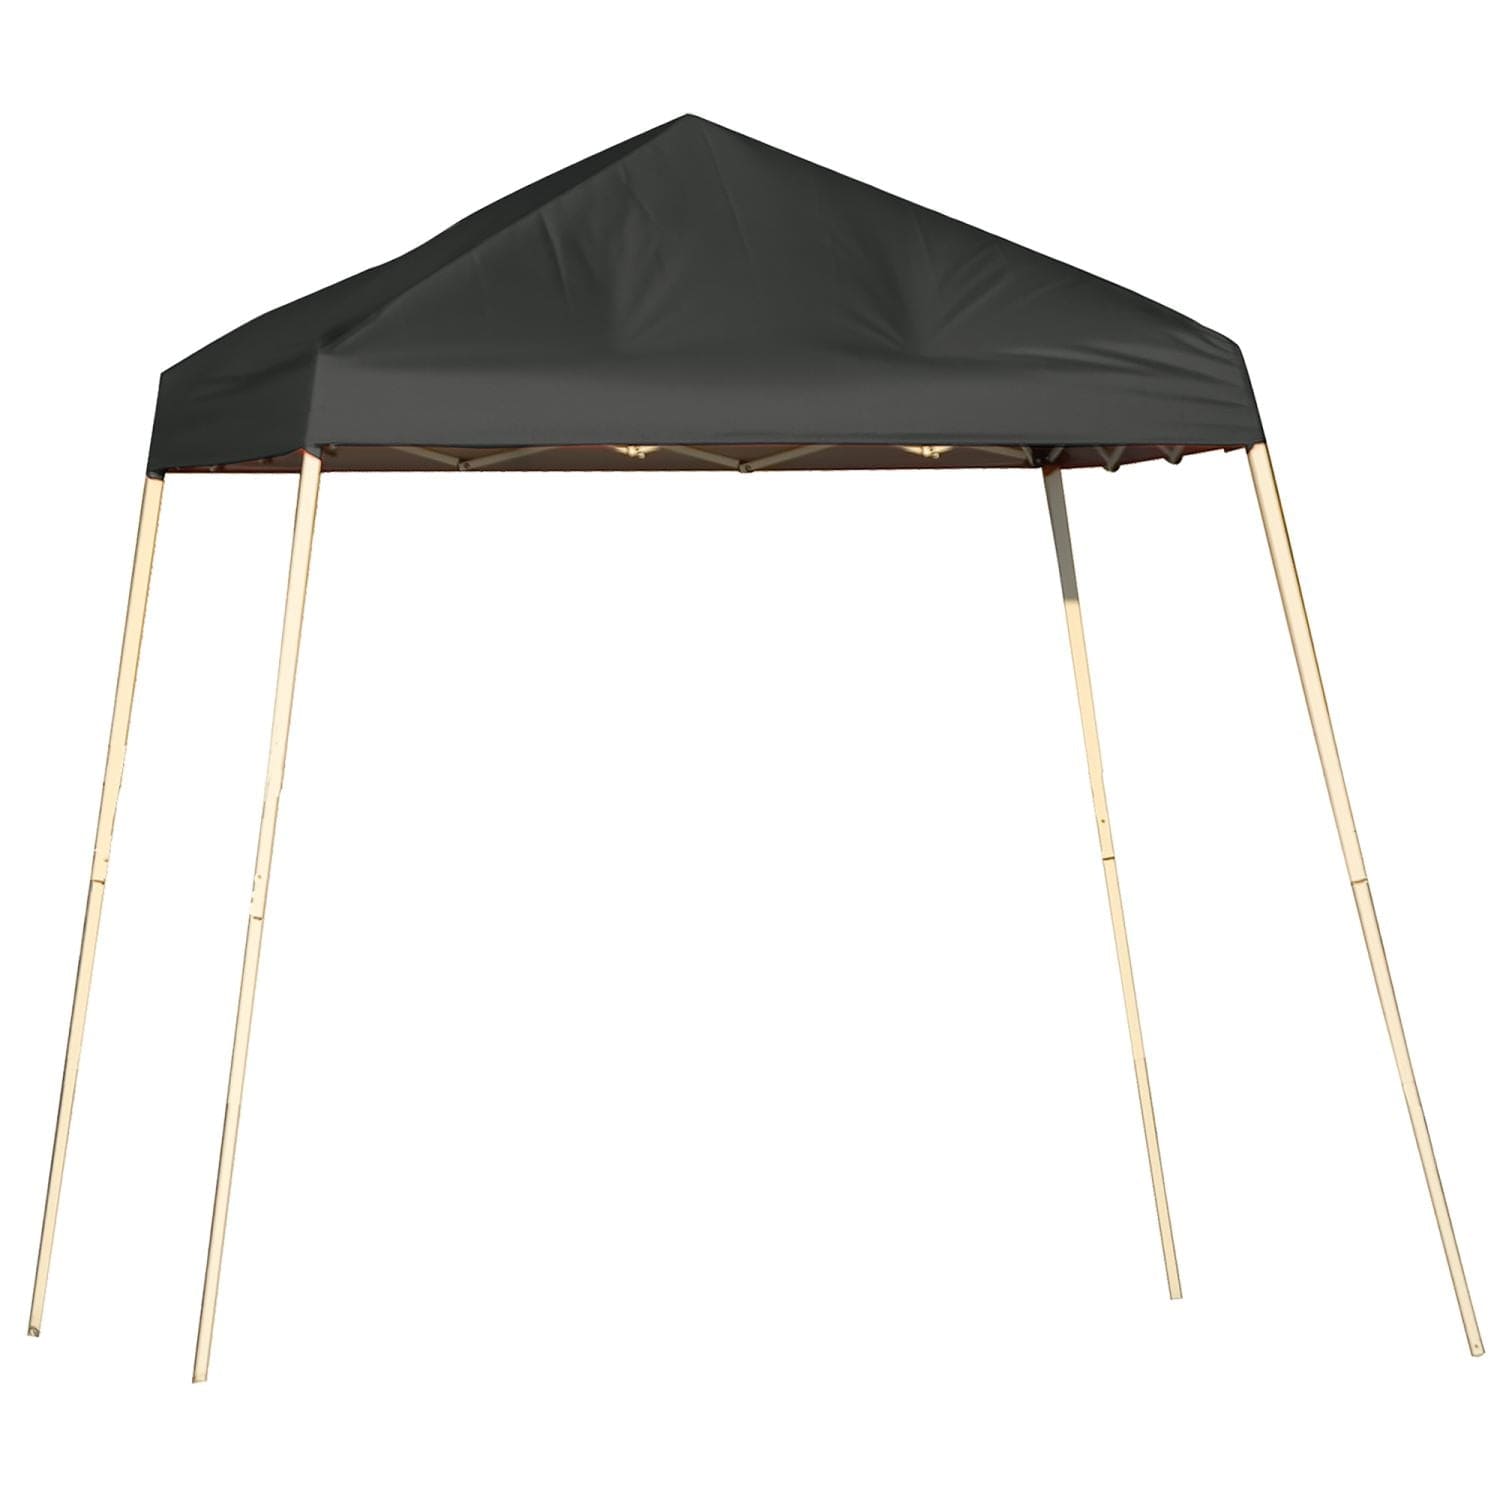 ShelterLogic Pop-Up Canopies ShelterLogic | Pop-Up Canopy HD - Slant Leg 8 X 8 ft. Black 22573